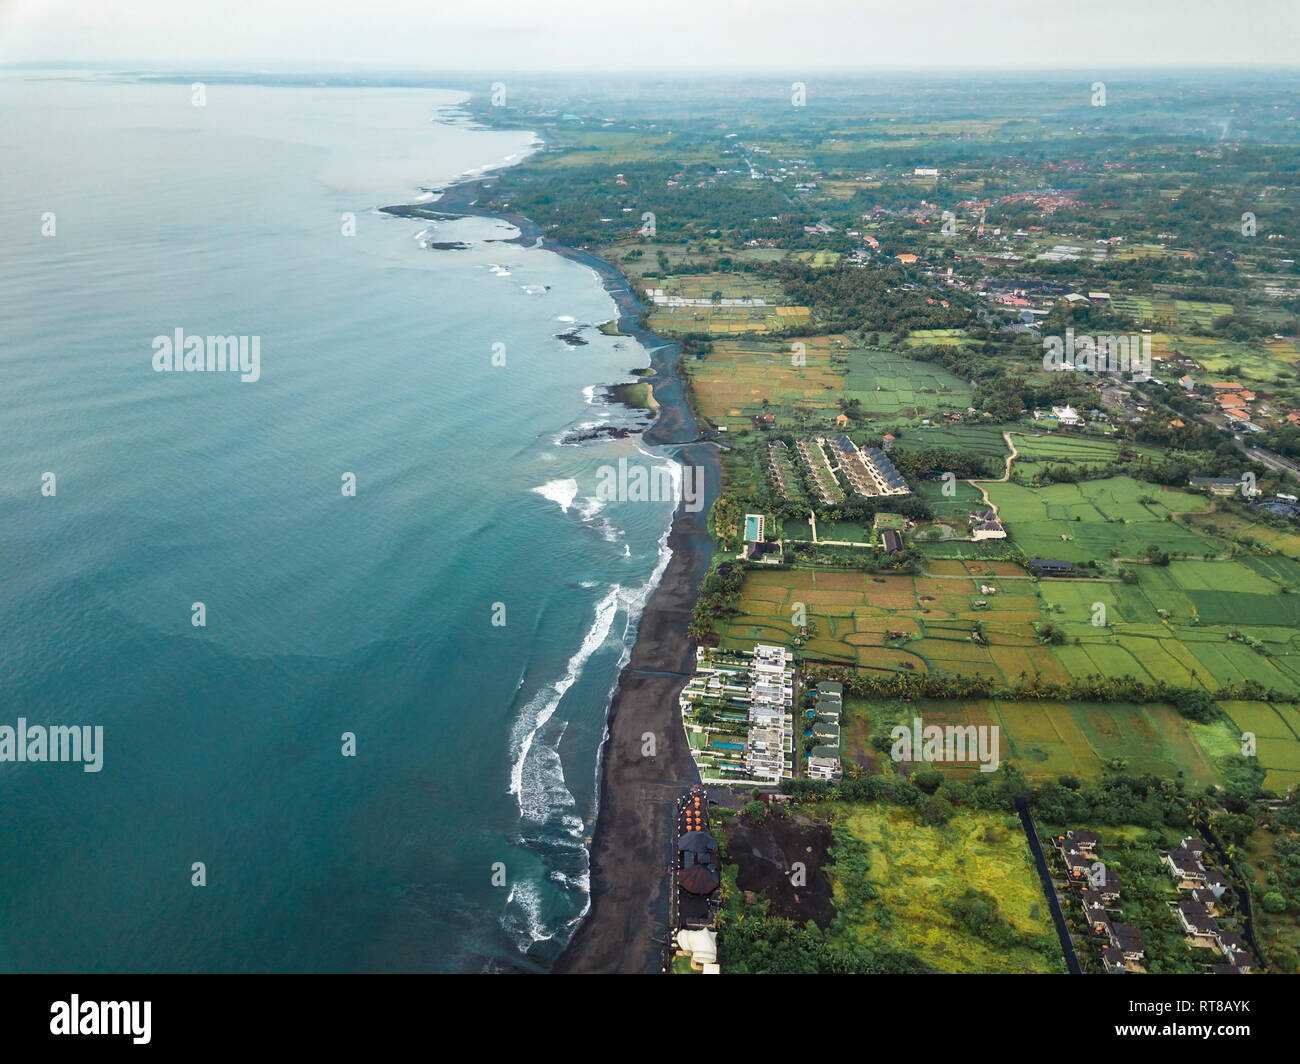 Indonesia, Bali, Aerial view of Keramas beach Stock Photo